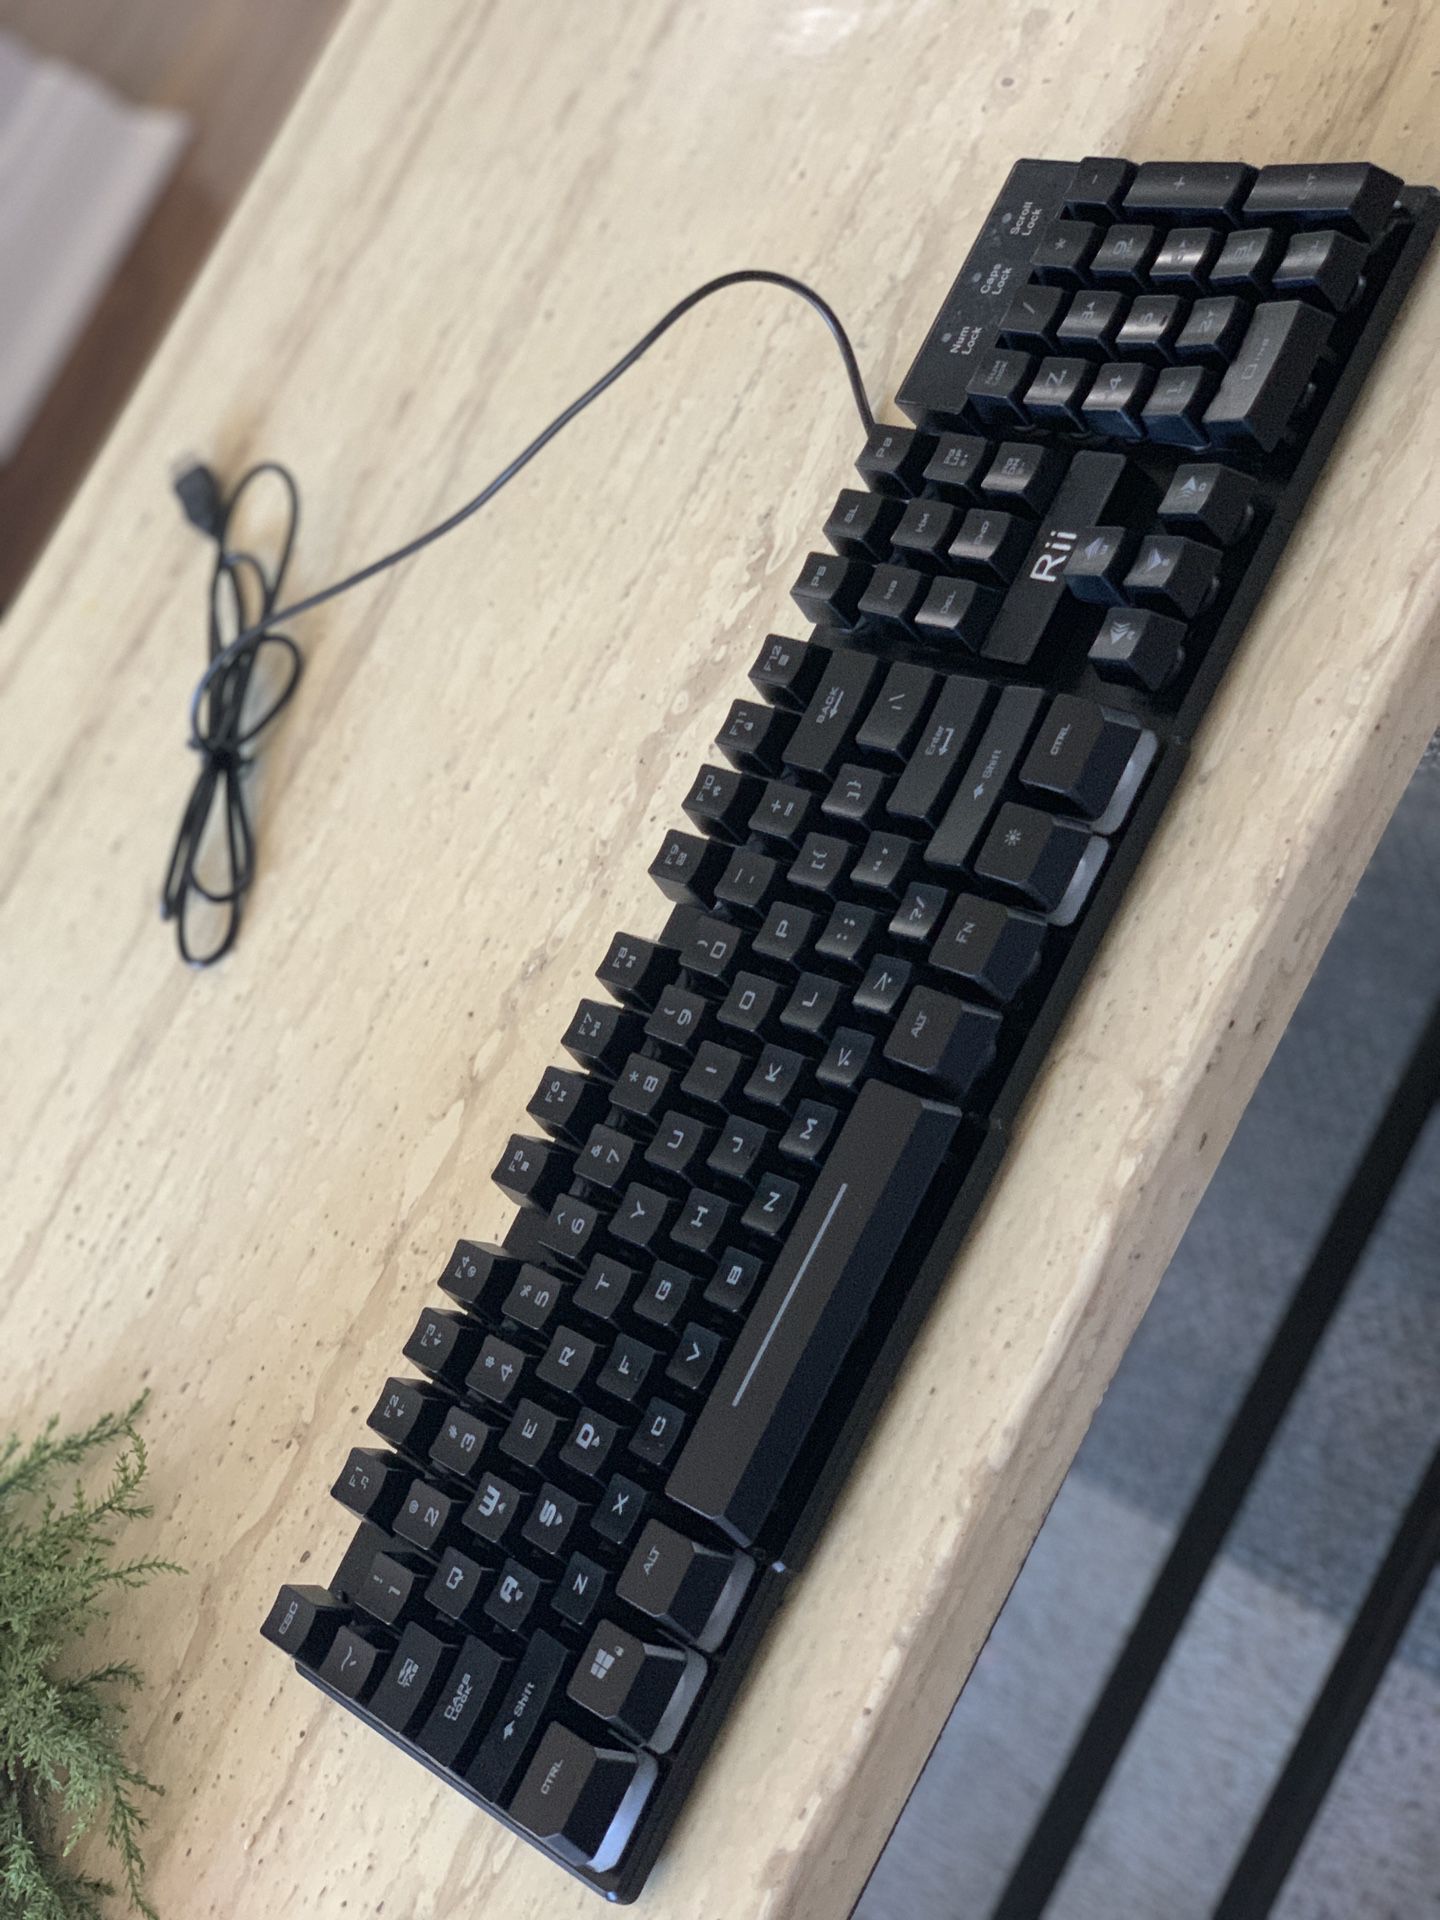 Mixed Color LED Backlit Gaming Keyboard